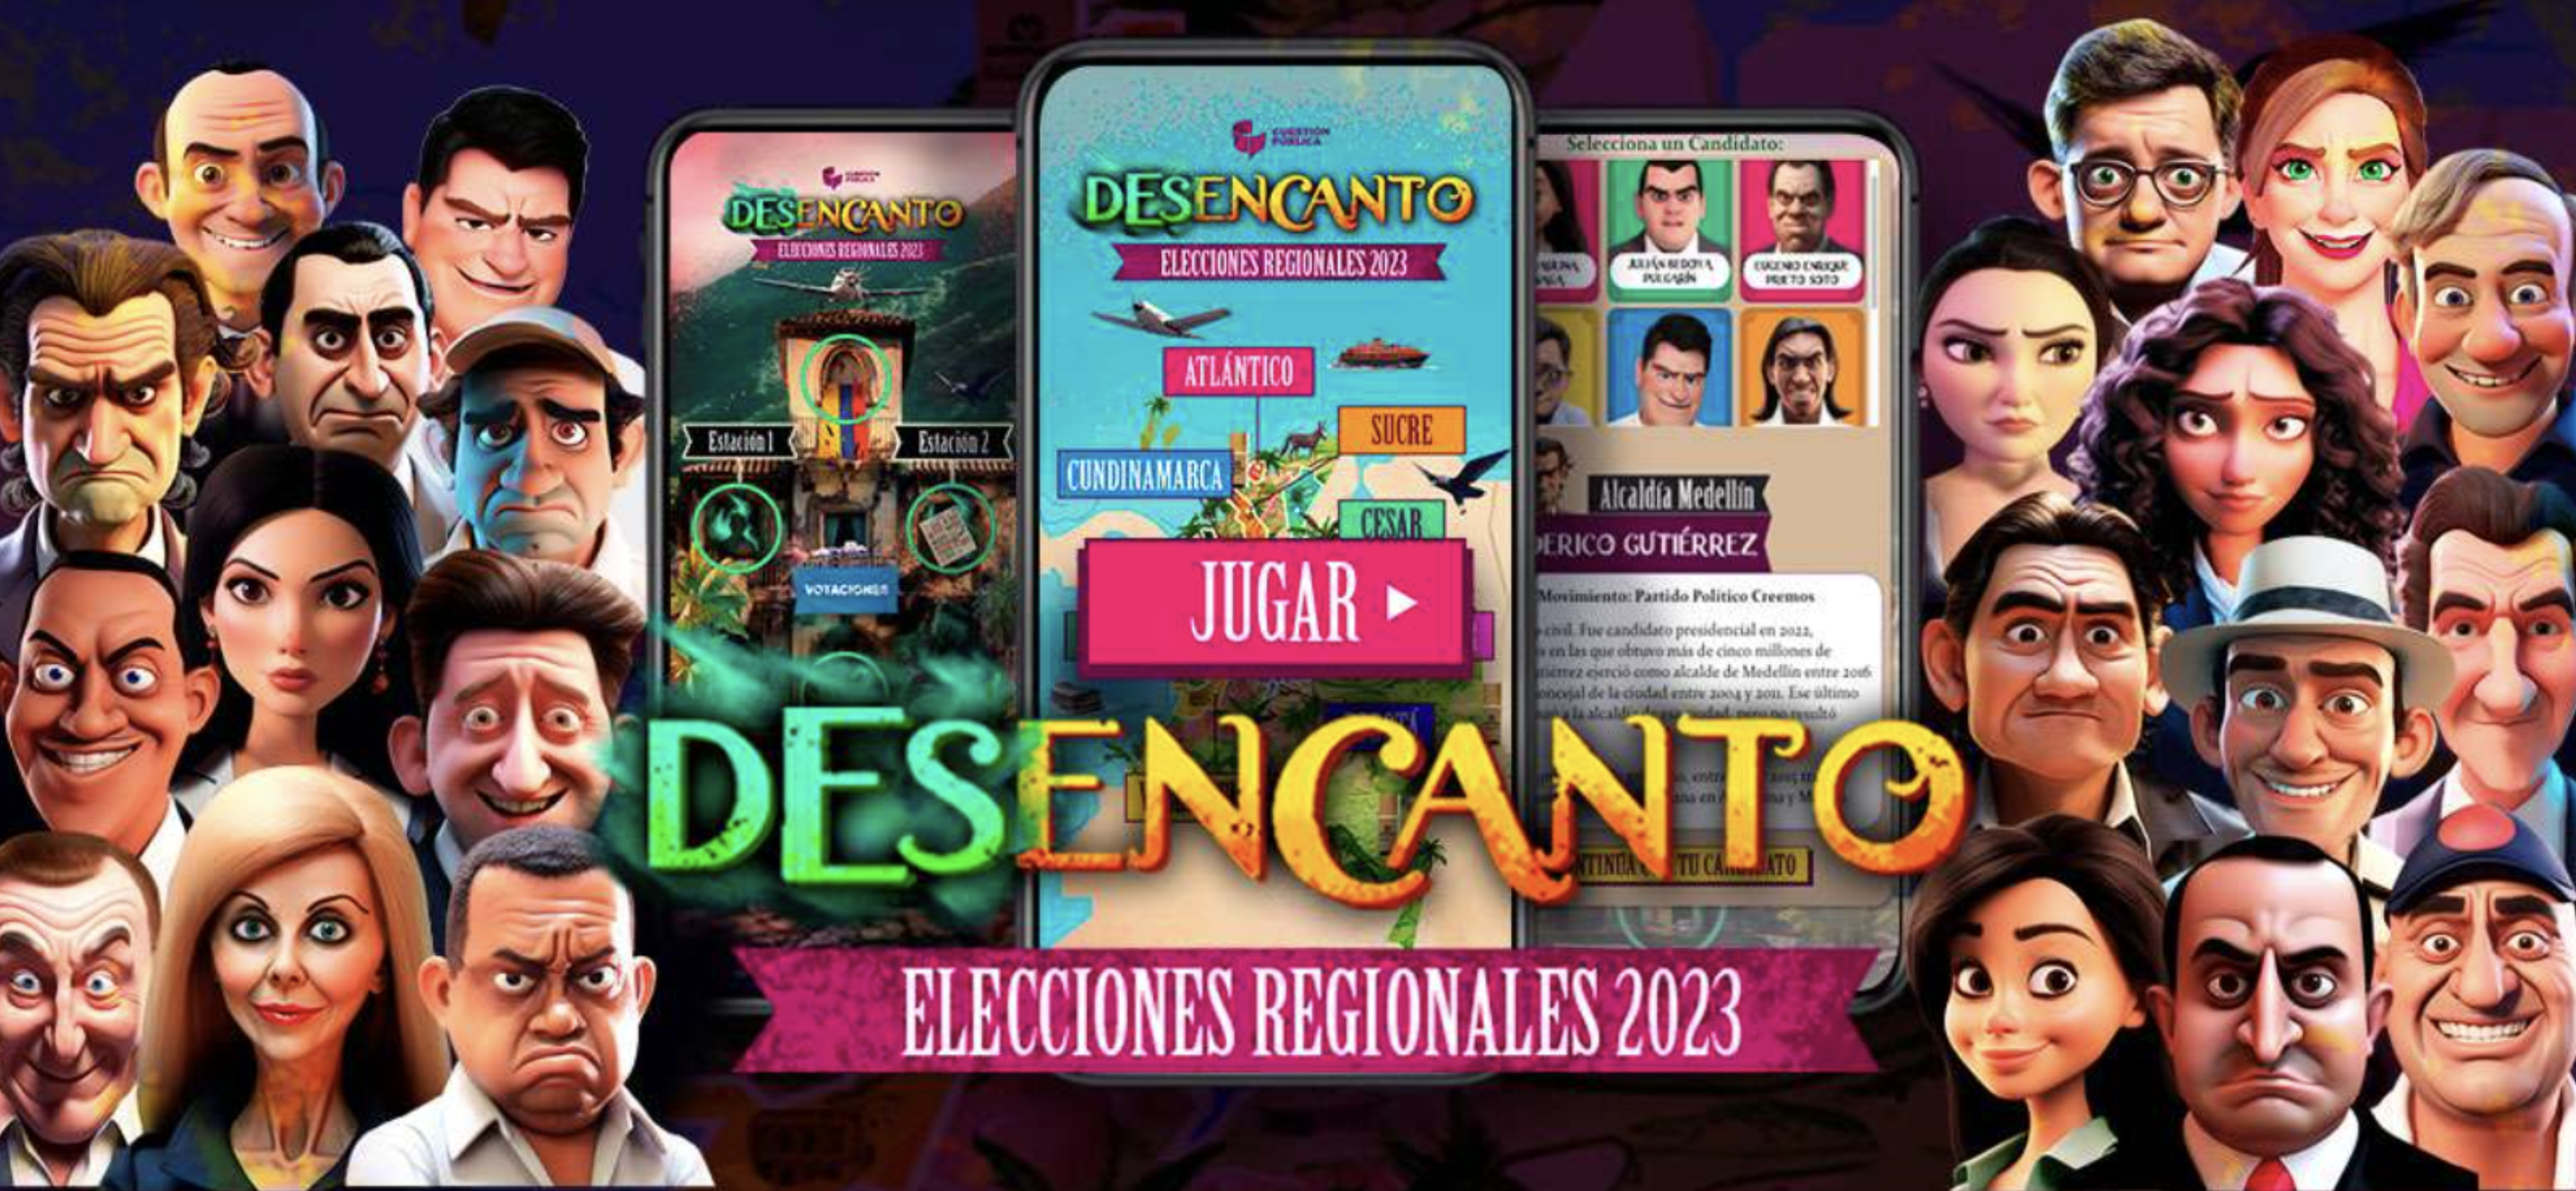 Screenshot of "Desencanto" videogame, created by Colombian news outlet Cuestión Pública.